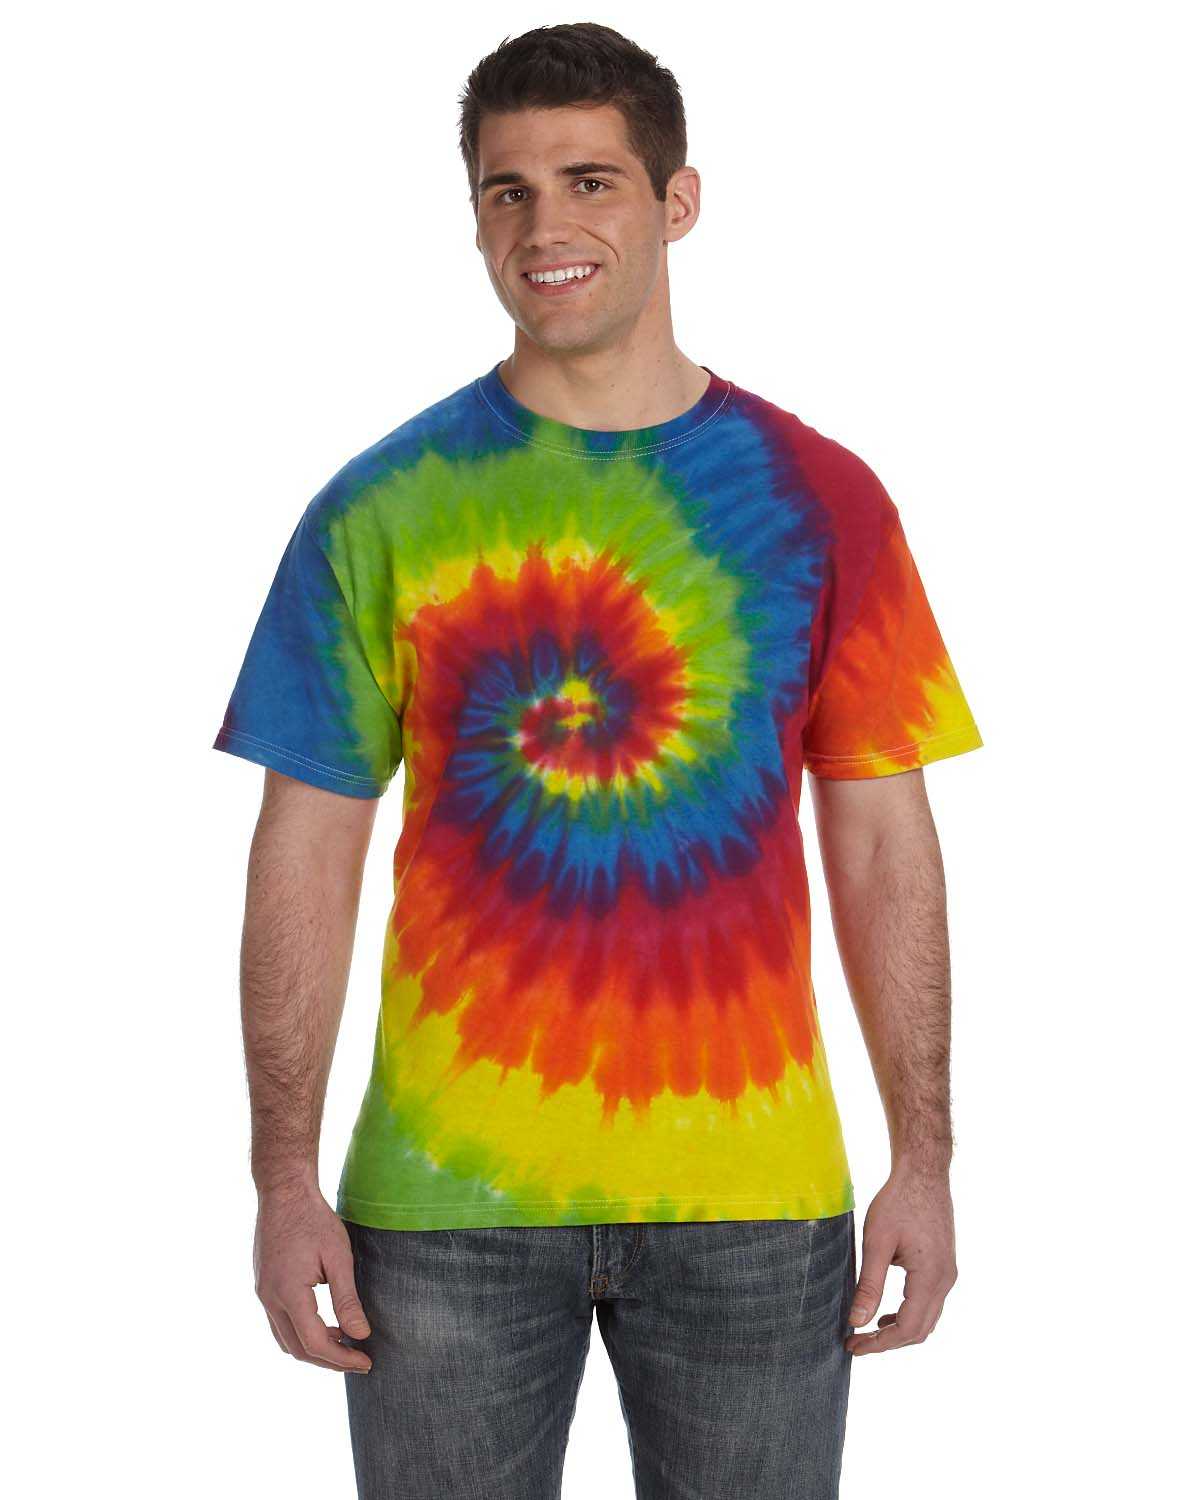  Tie  Dye  CD100 Adult 5 4 oz 100 Cotton Tie  Dyed T  Shirt  